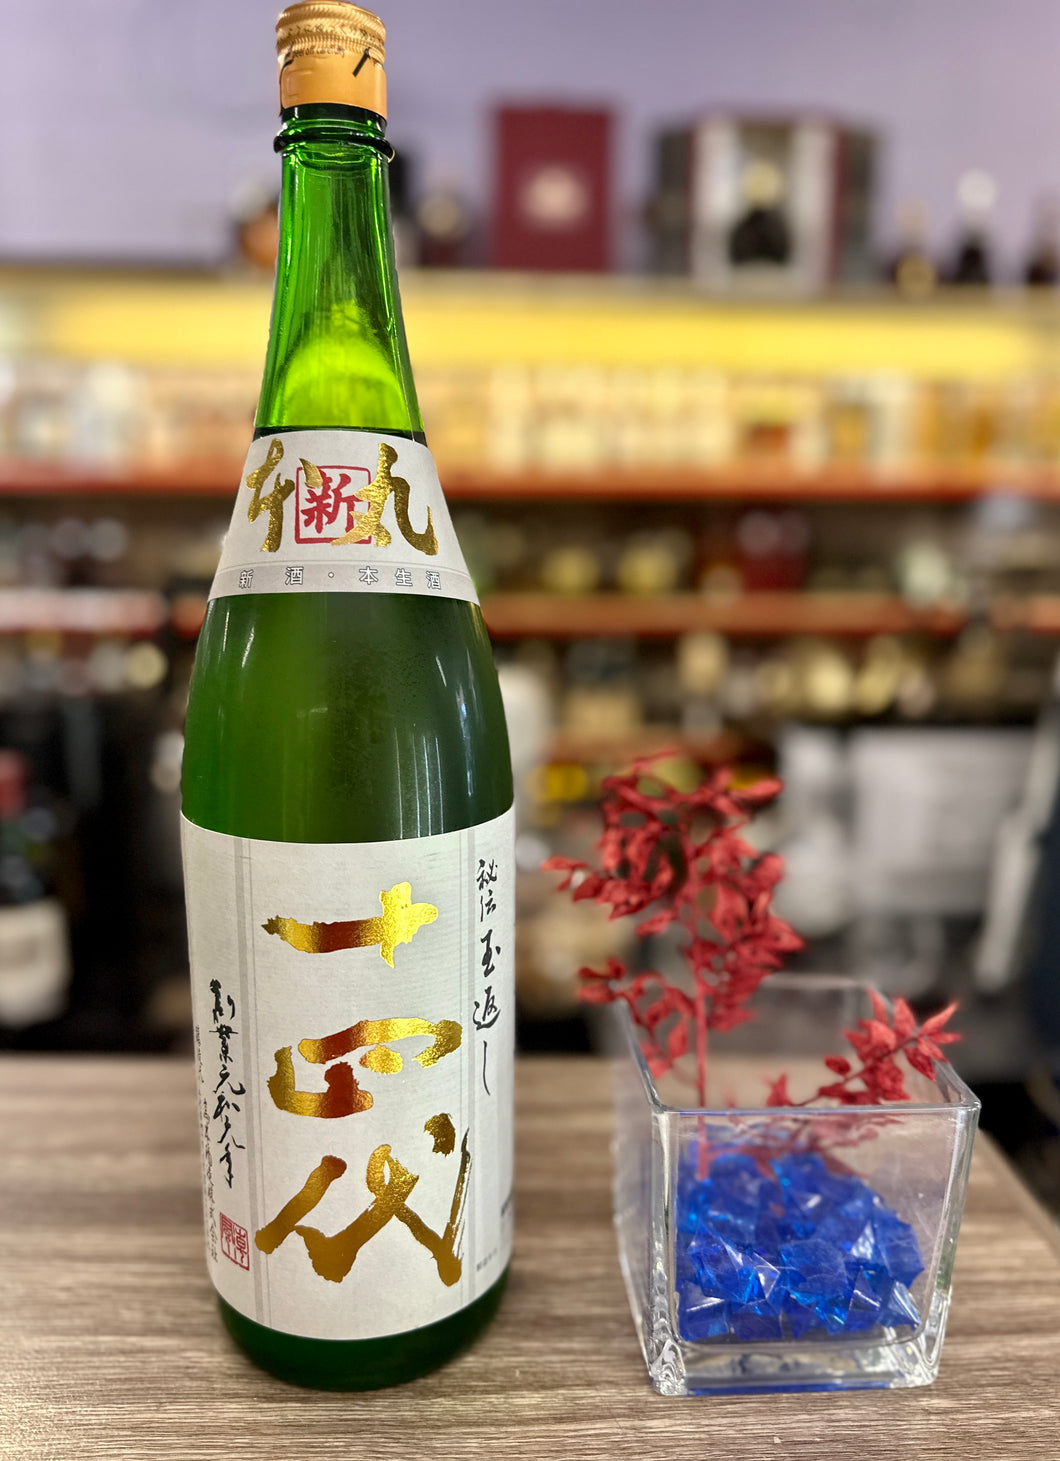 Juyondai 'Honmaru' Hiden Tamakaeshi Tokubetsu Sake, 1.8 Liter